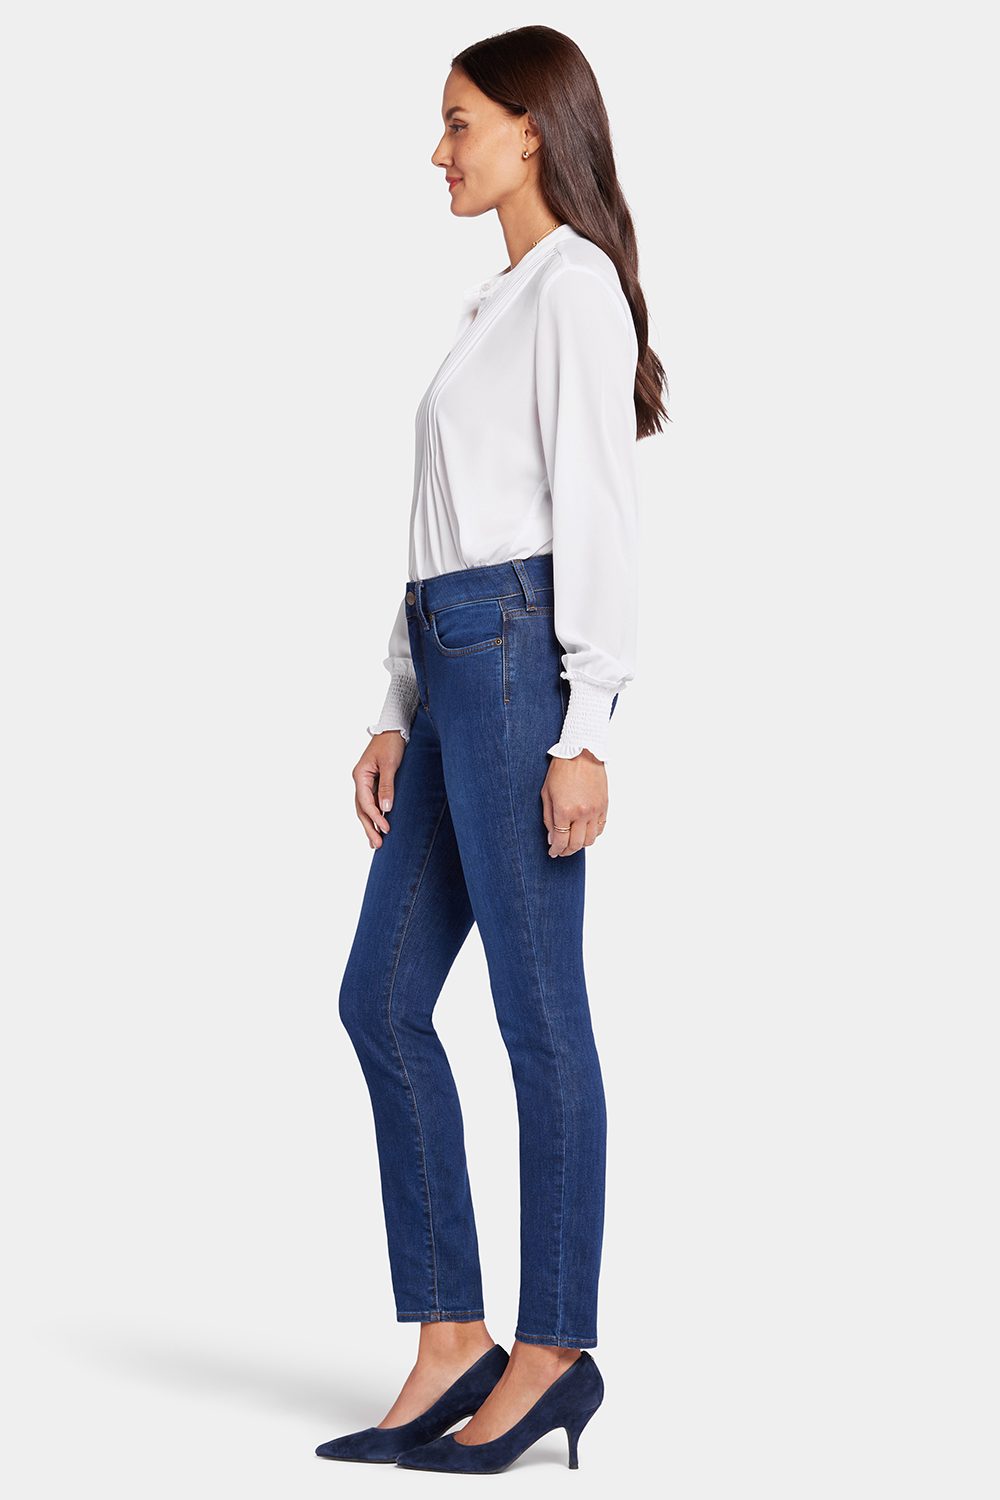 NYDJ Ami Skinny Jeans In Petite  - Cooper